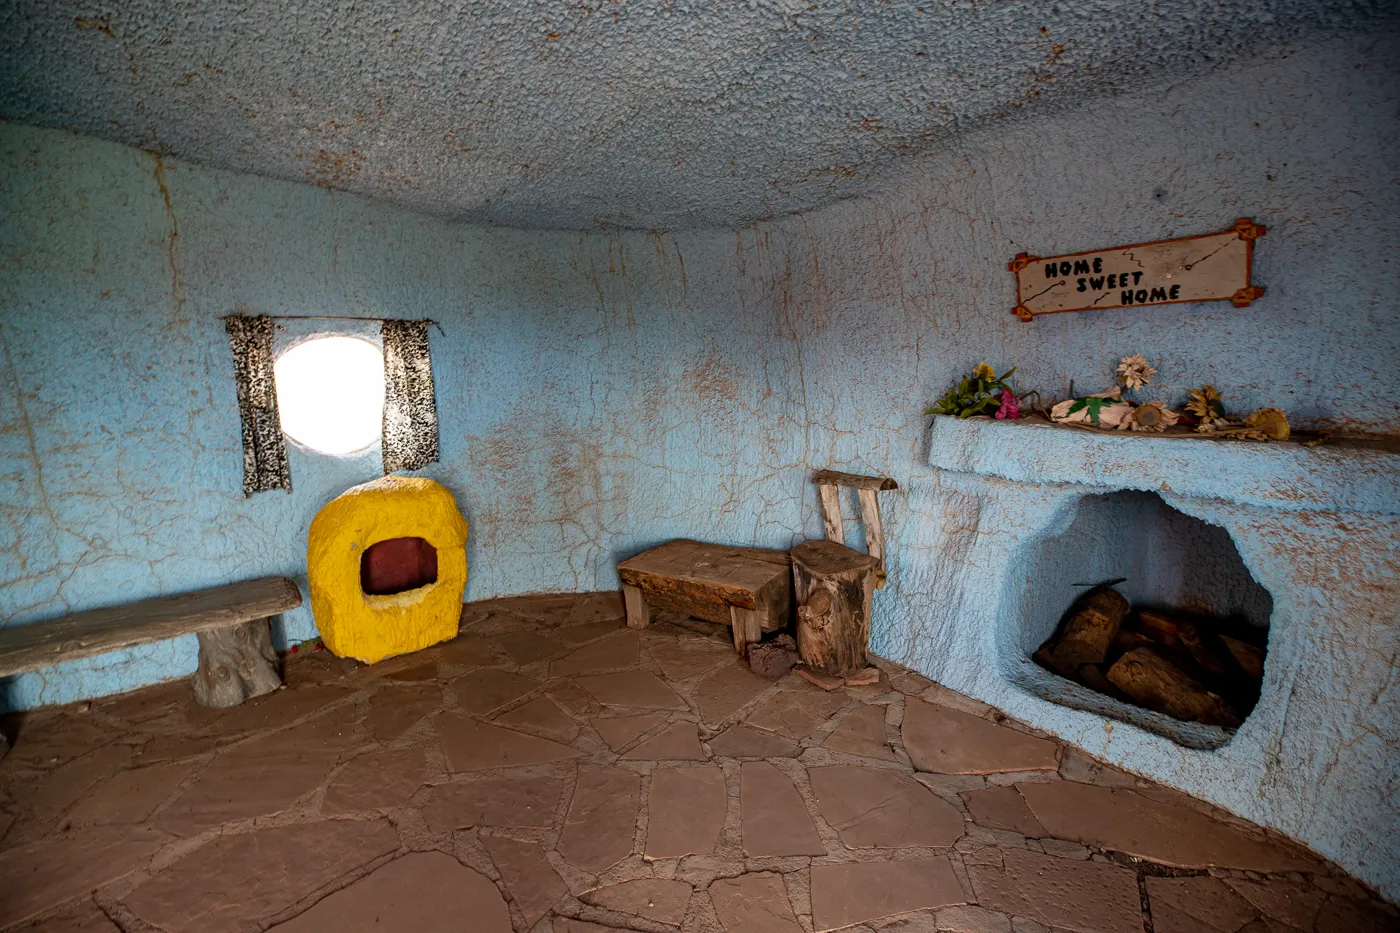 Inside Barney's House at Flintstones Bedrock City in Williams, Arizona